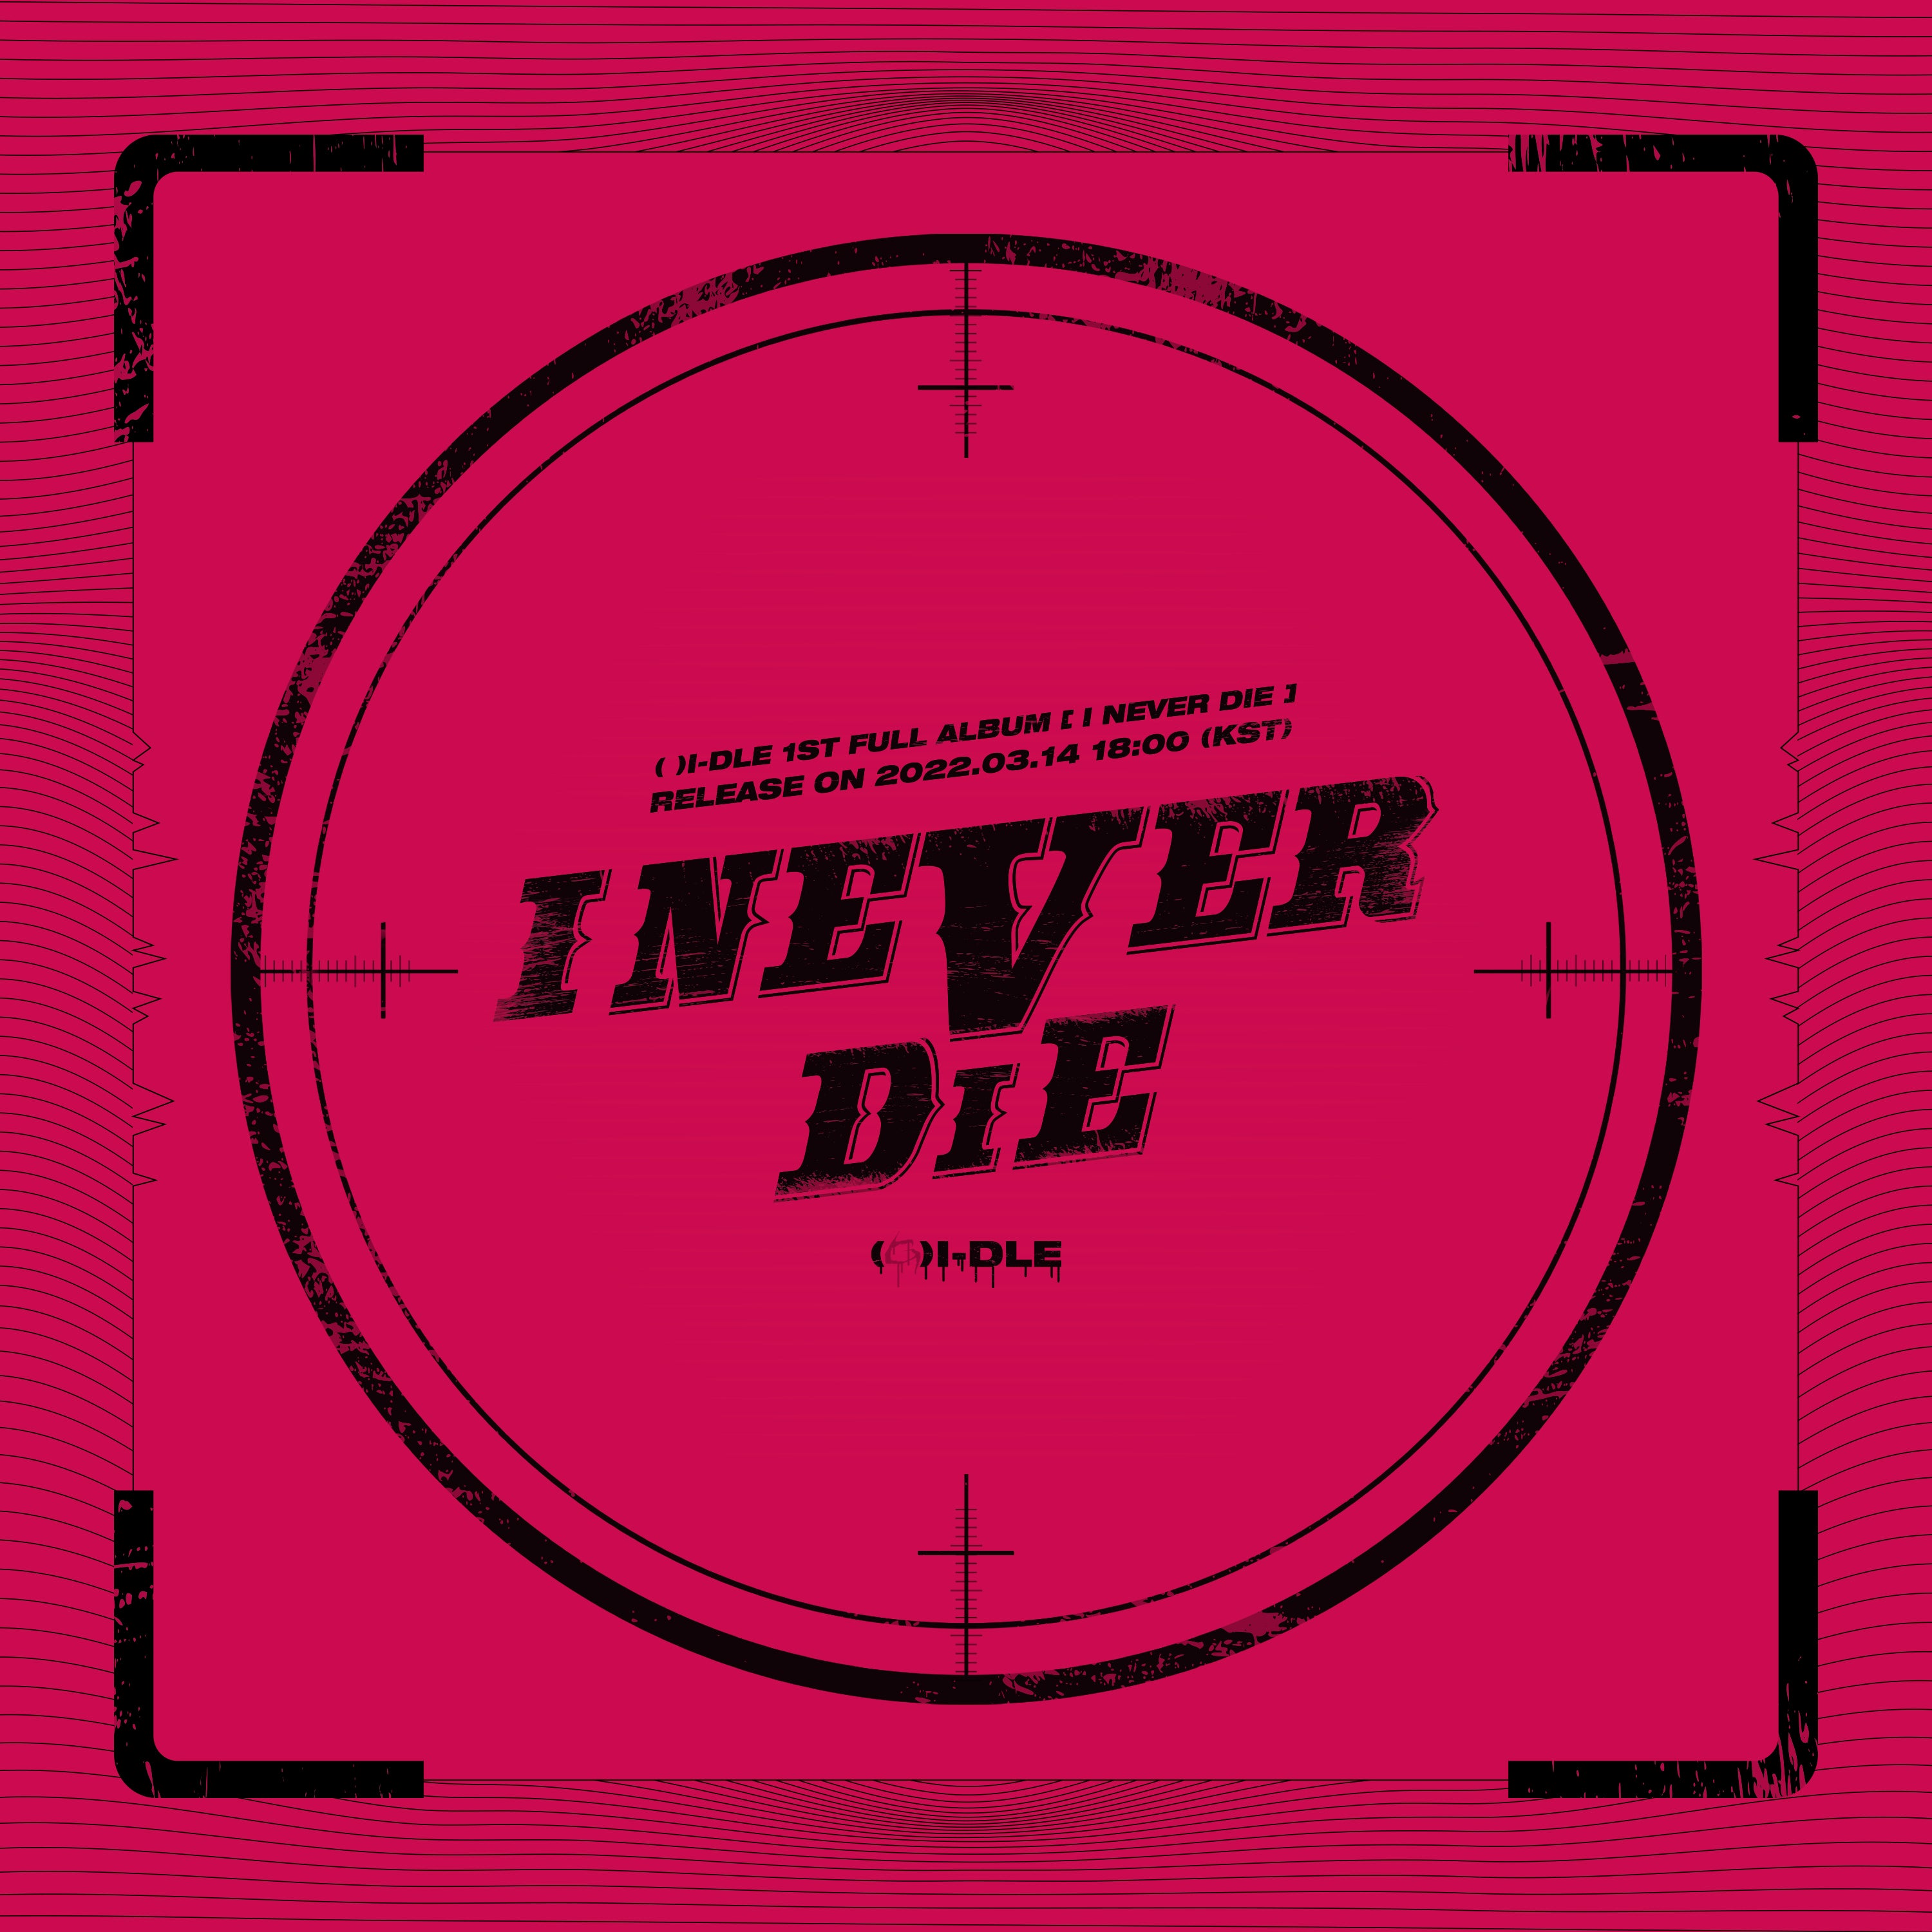 G)I DLE 1st Full Album: I NEVER DIE (Comeback Teaser Image)